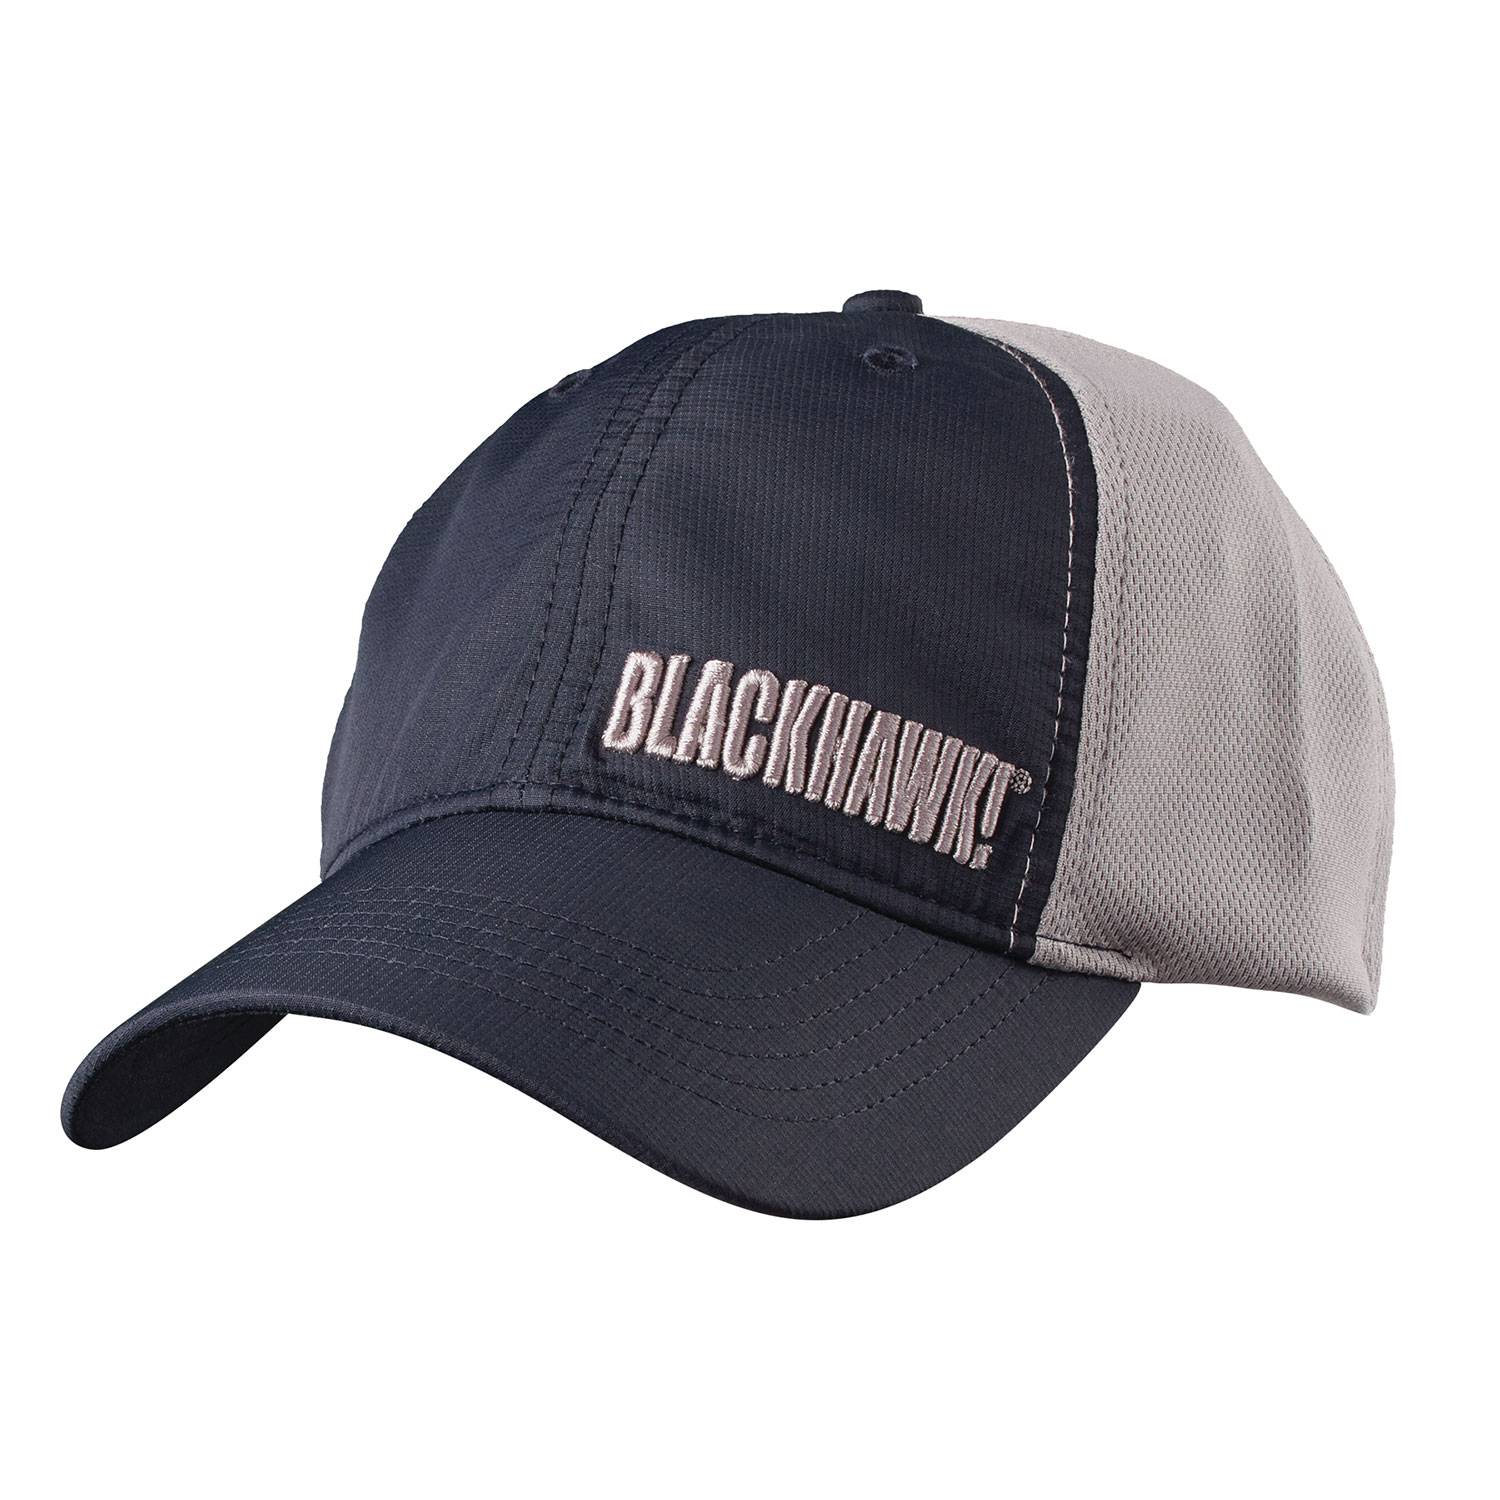 BLACKHAWK! PERFORMANCE MESH CAP